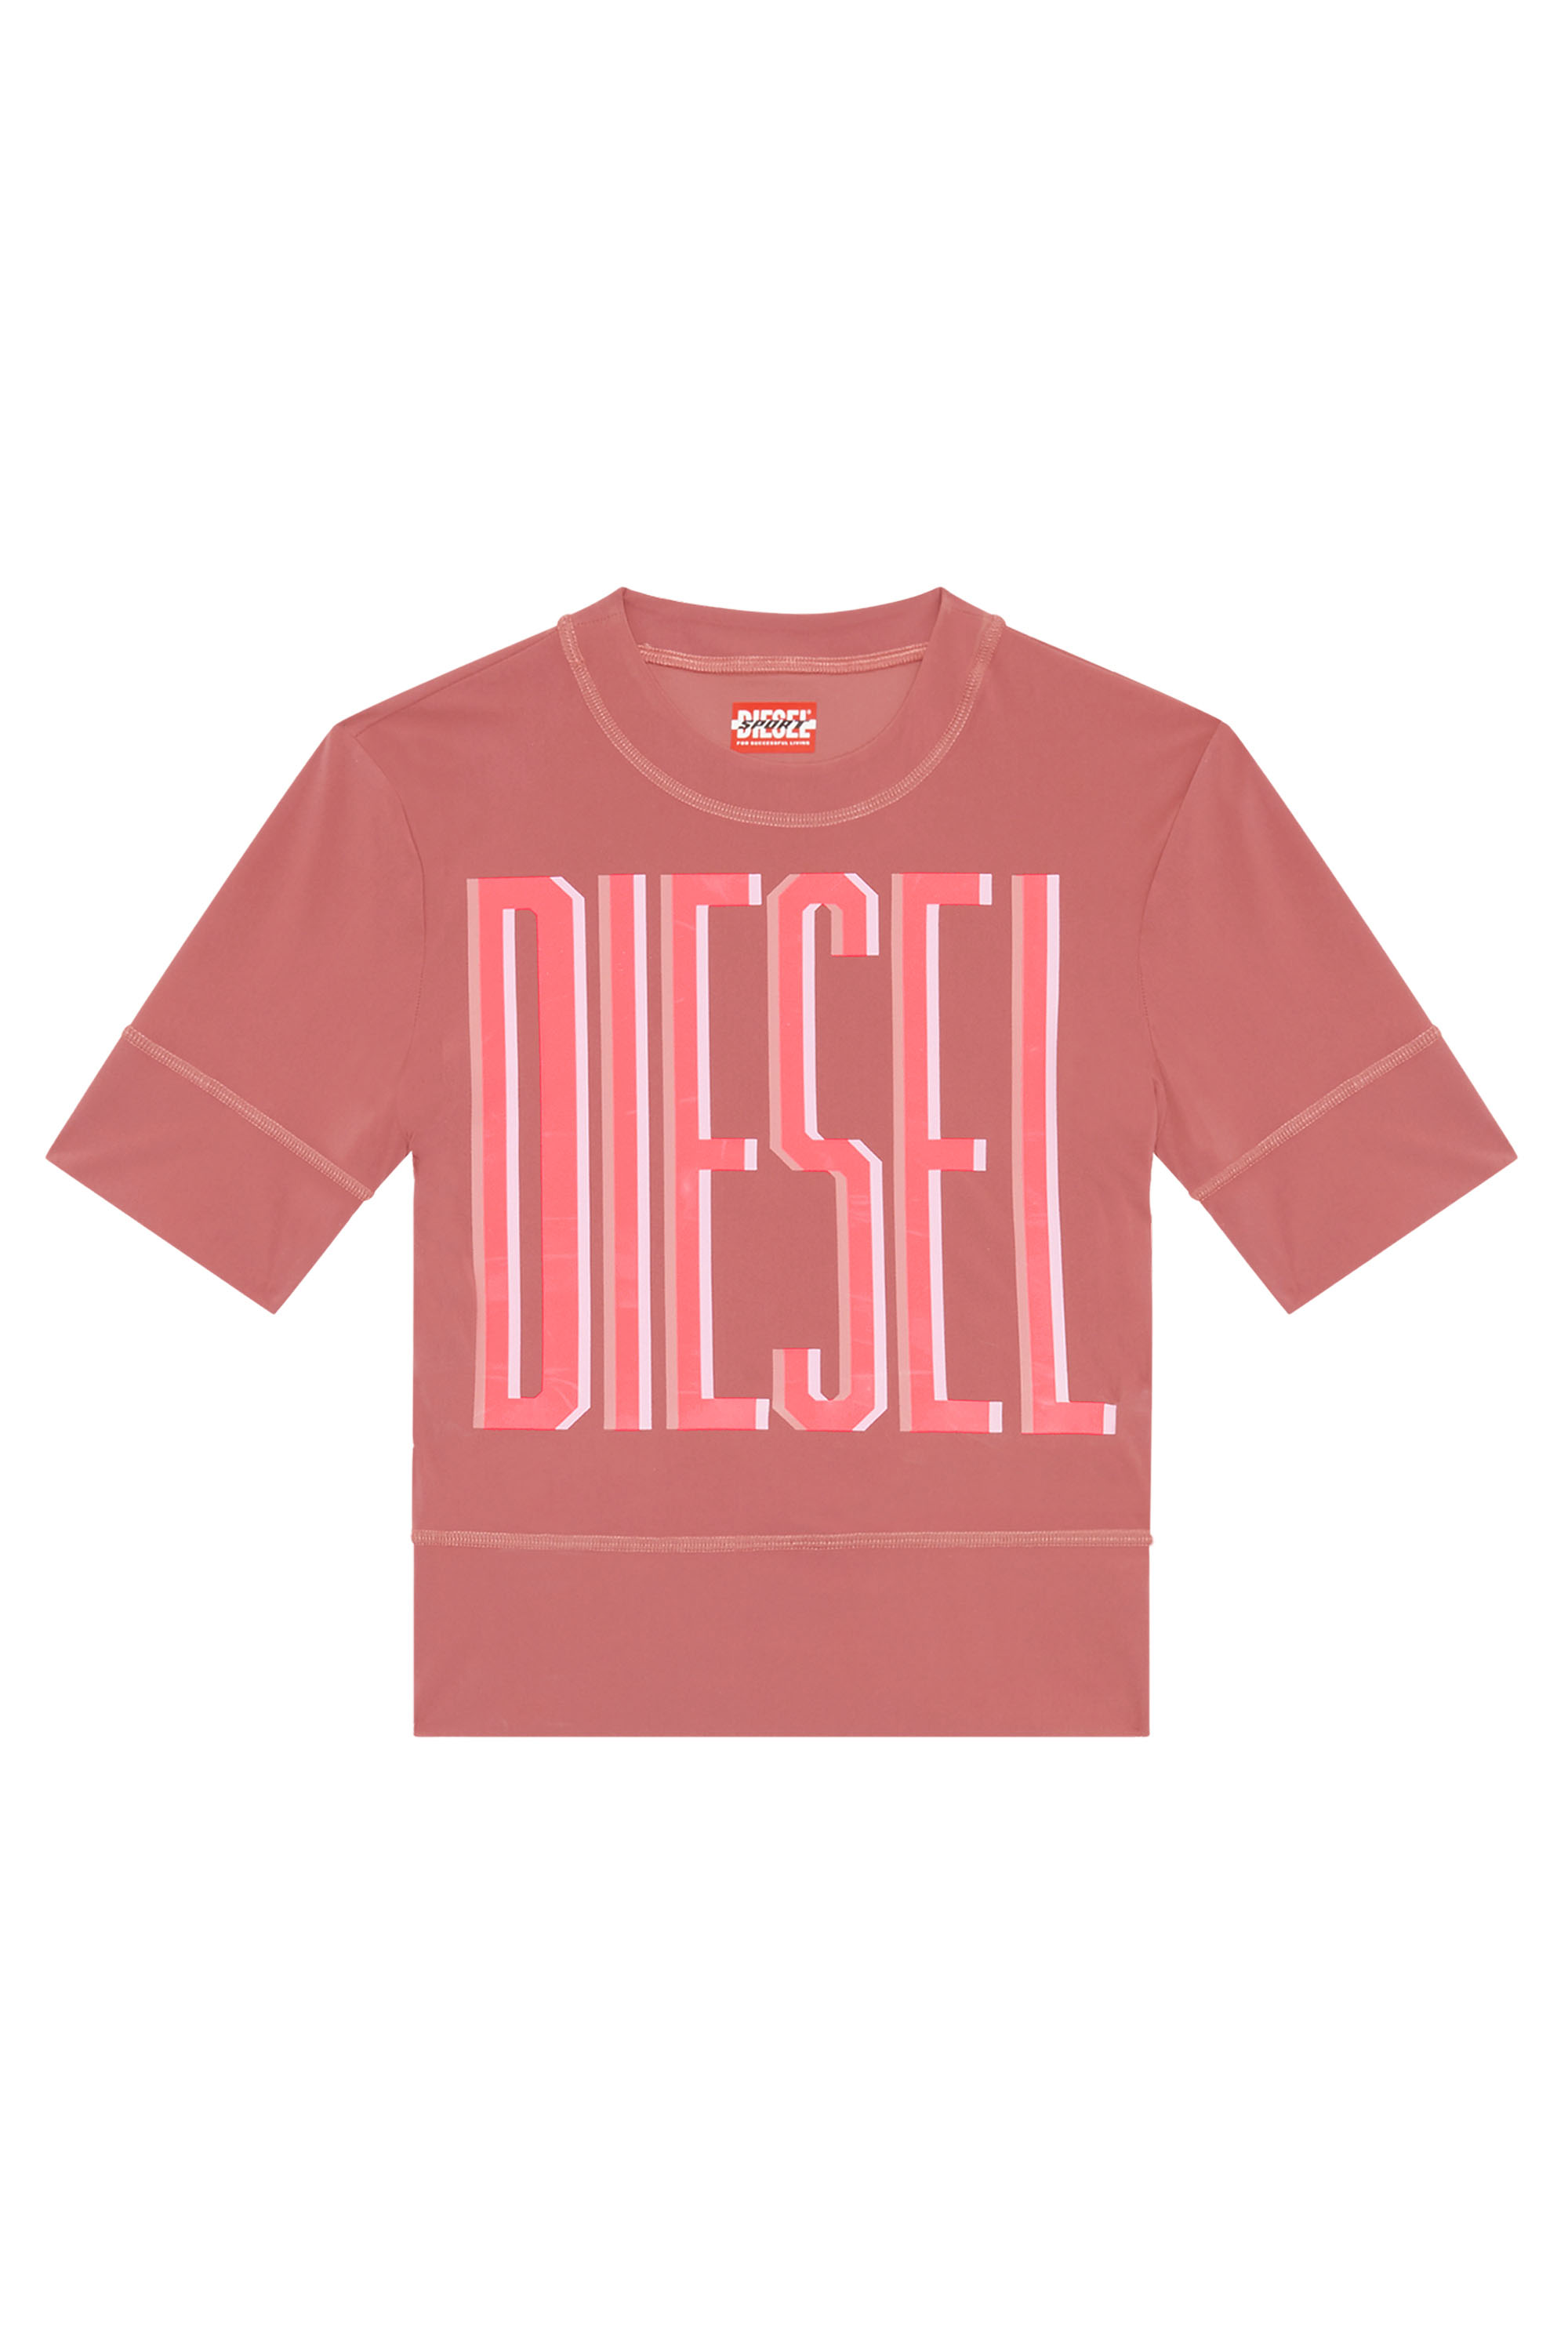 Diesel - AWTEE-JULES-WT06, Rosso - Image 1